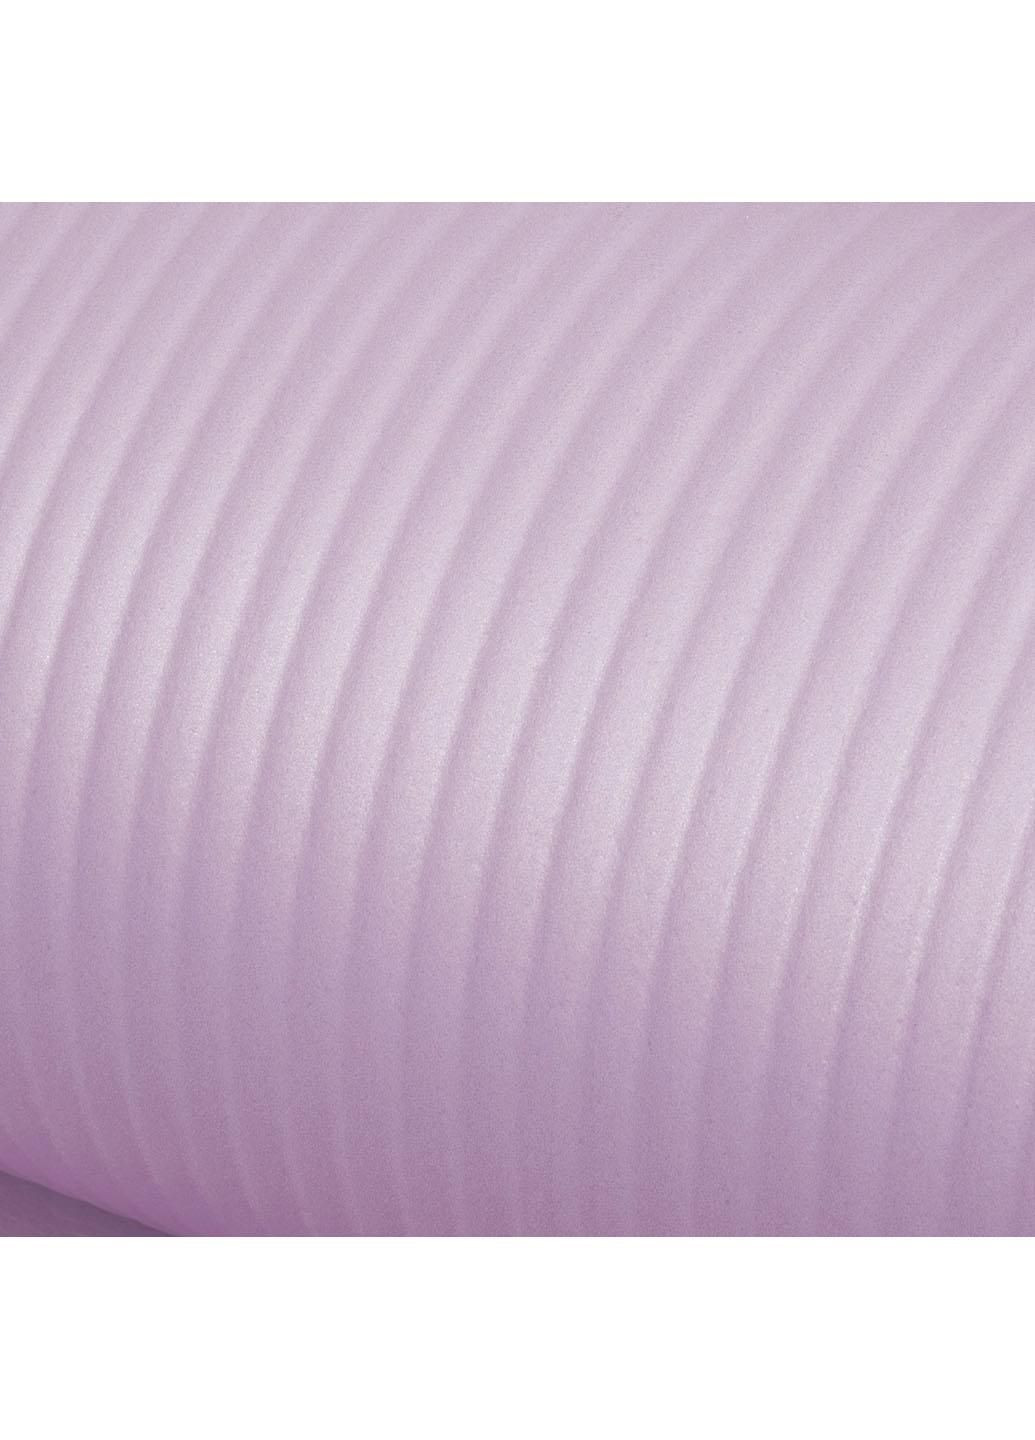 Коврик (мат) для йоги та фітнесу NBR 1 см YG0038 Purple Springos (280911283)